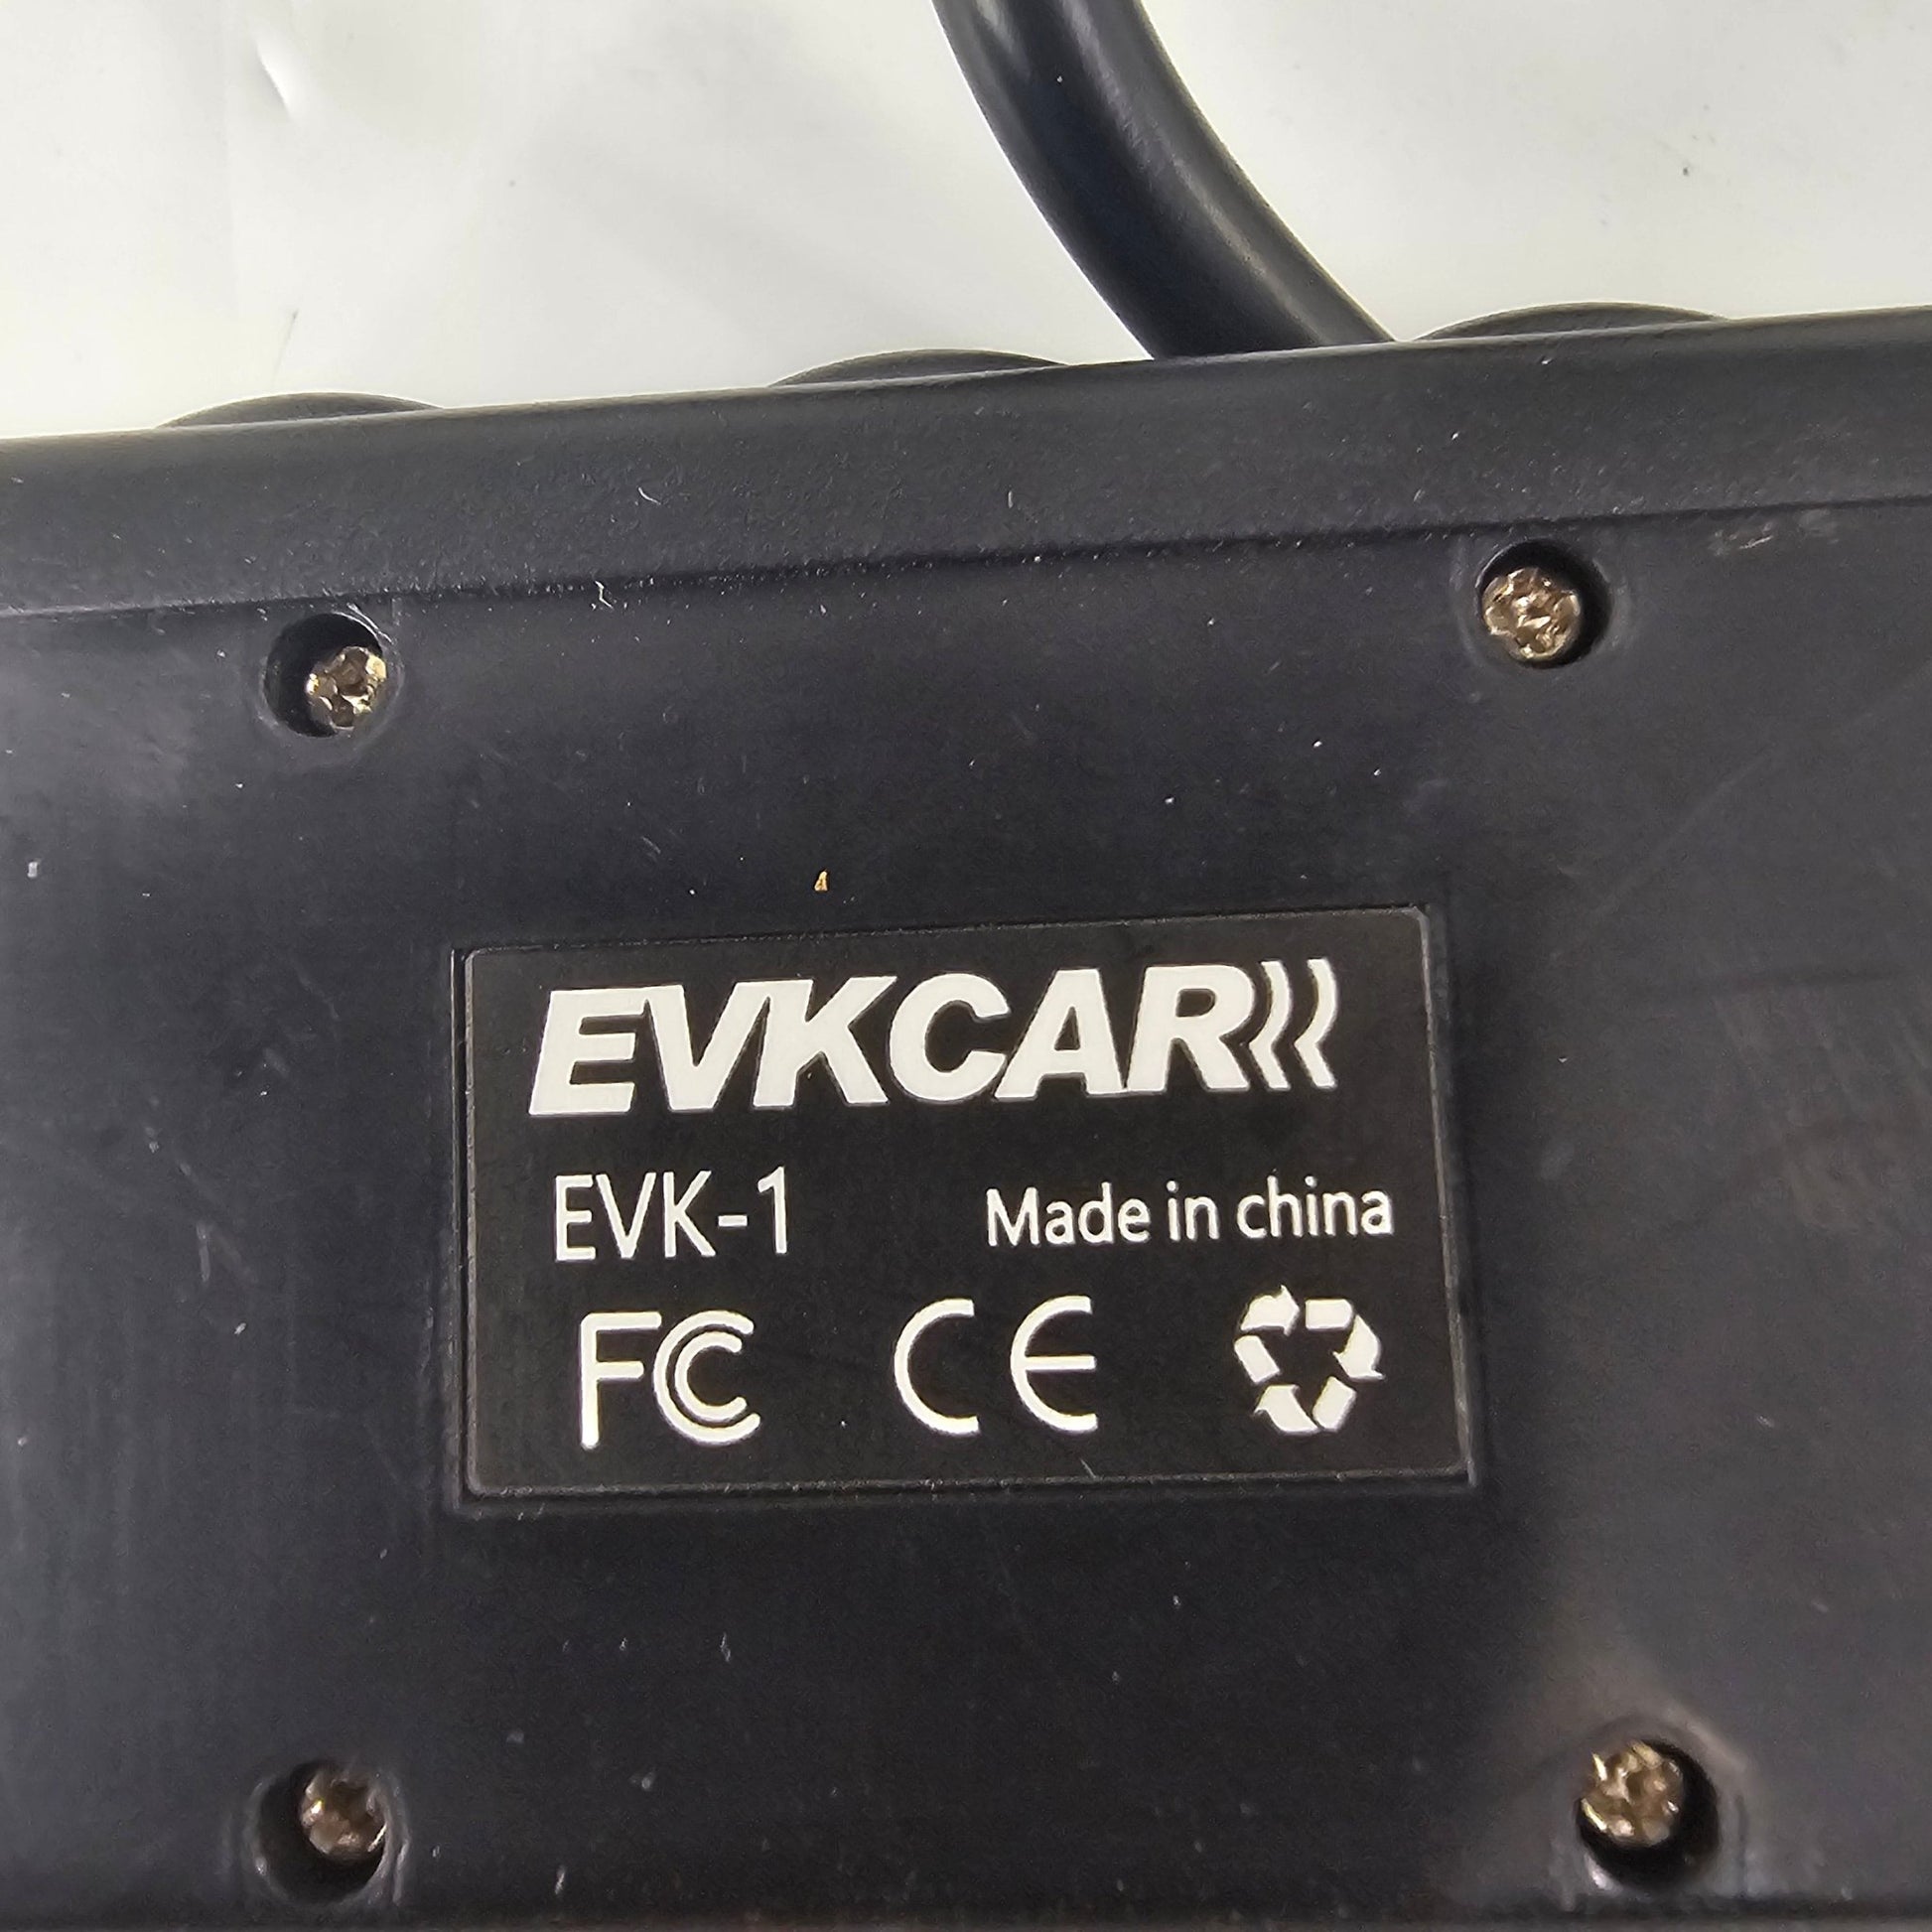 Throttle Response Controller  Evkcar EVK-1 - DQ Distribution